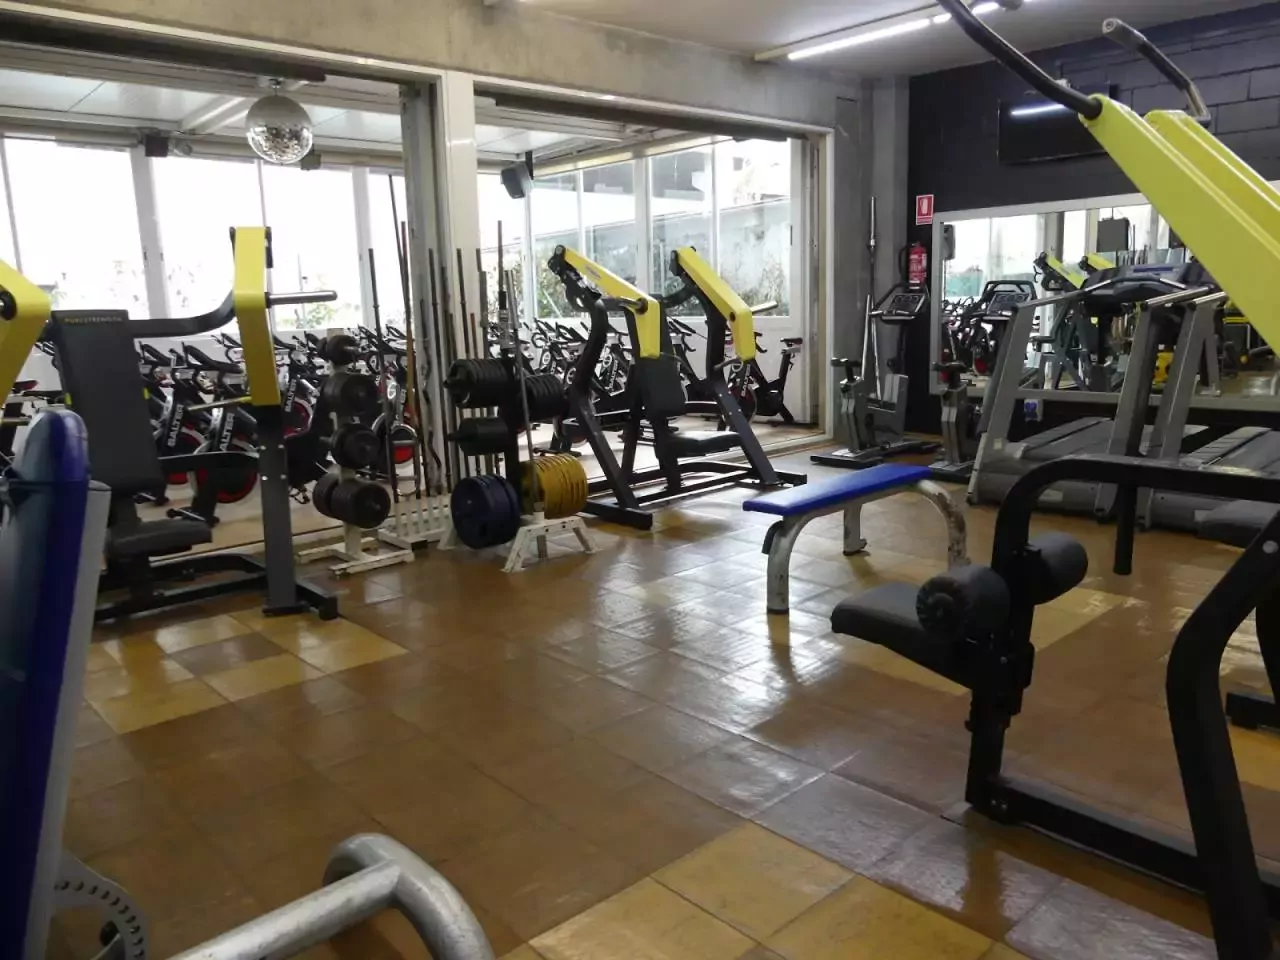 5. Jordi's Gym Fitness